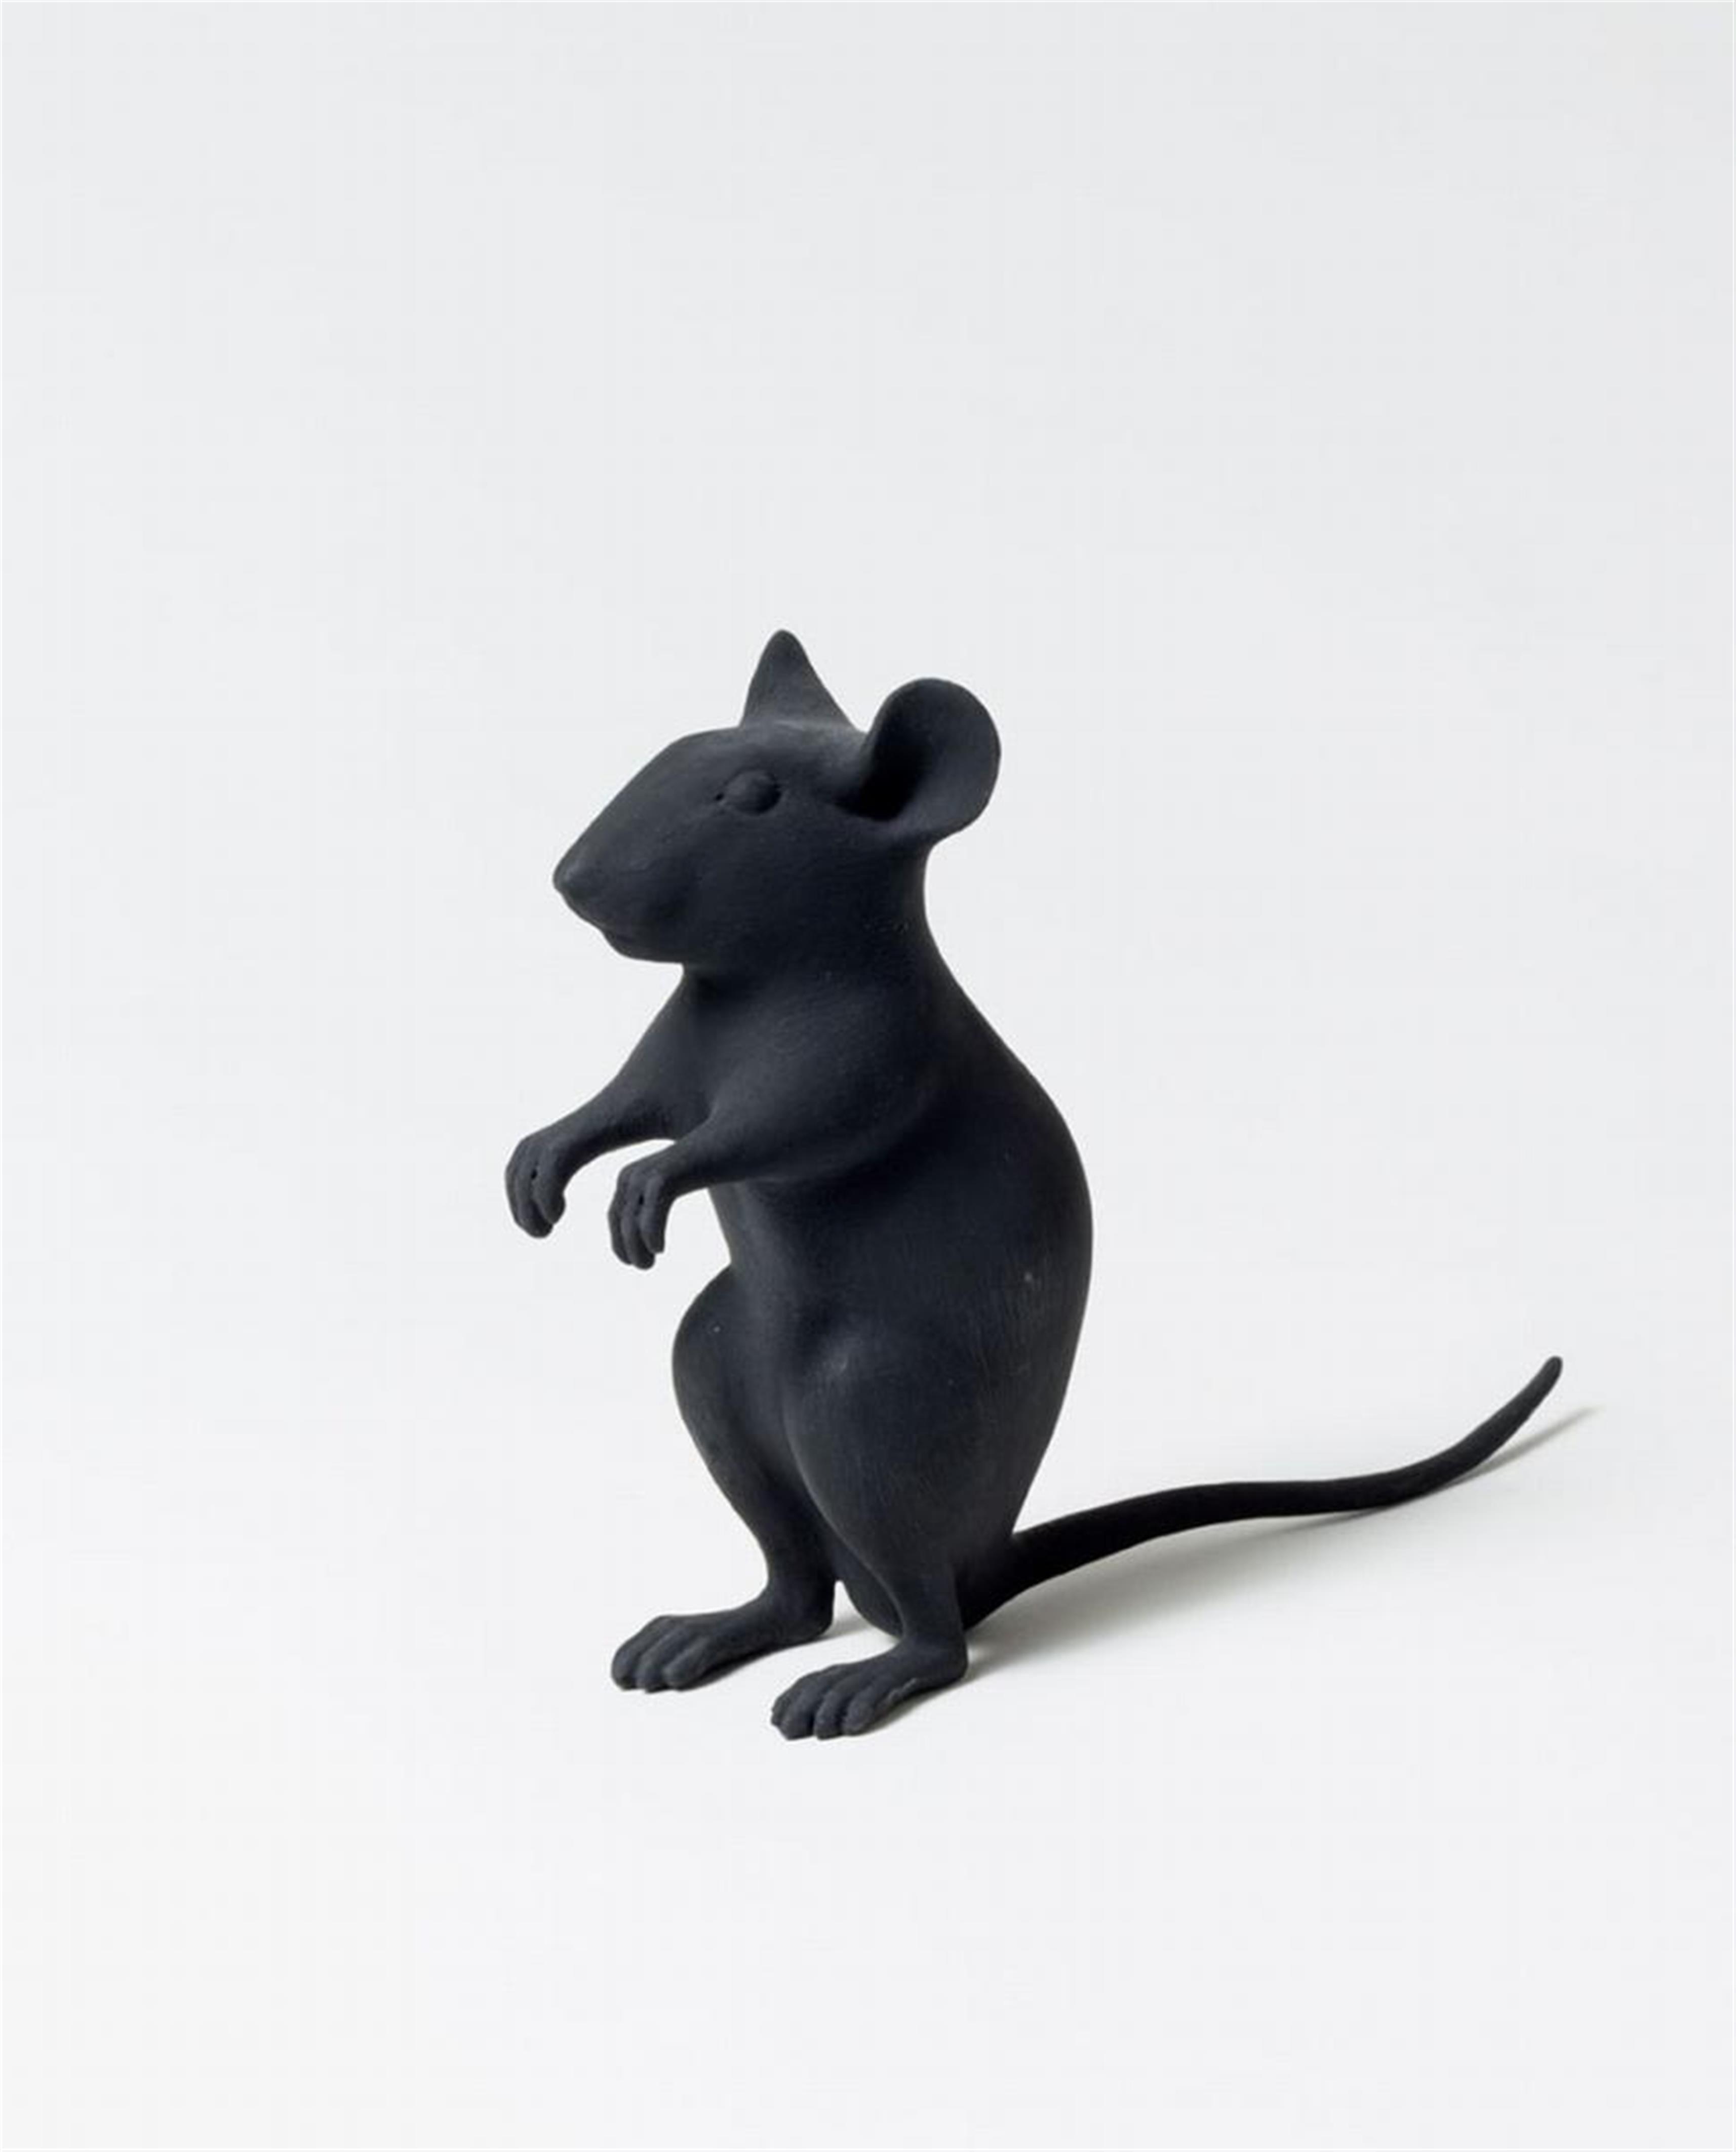 Katharina Fritsch - Maus (Mouse) - image-1